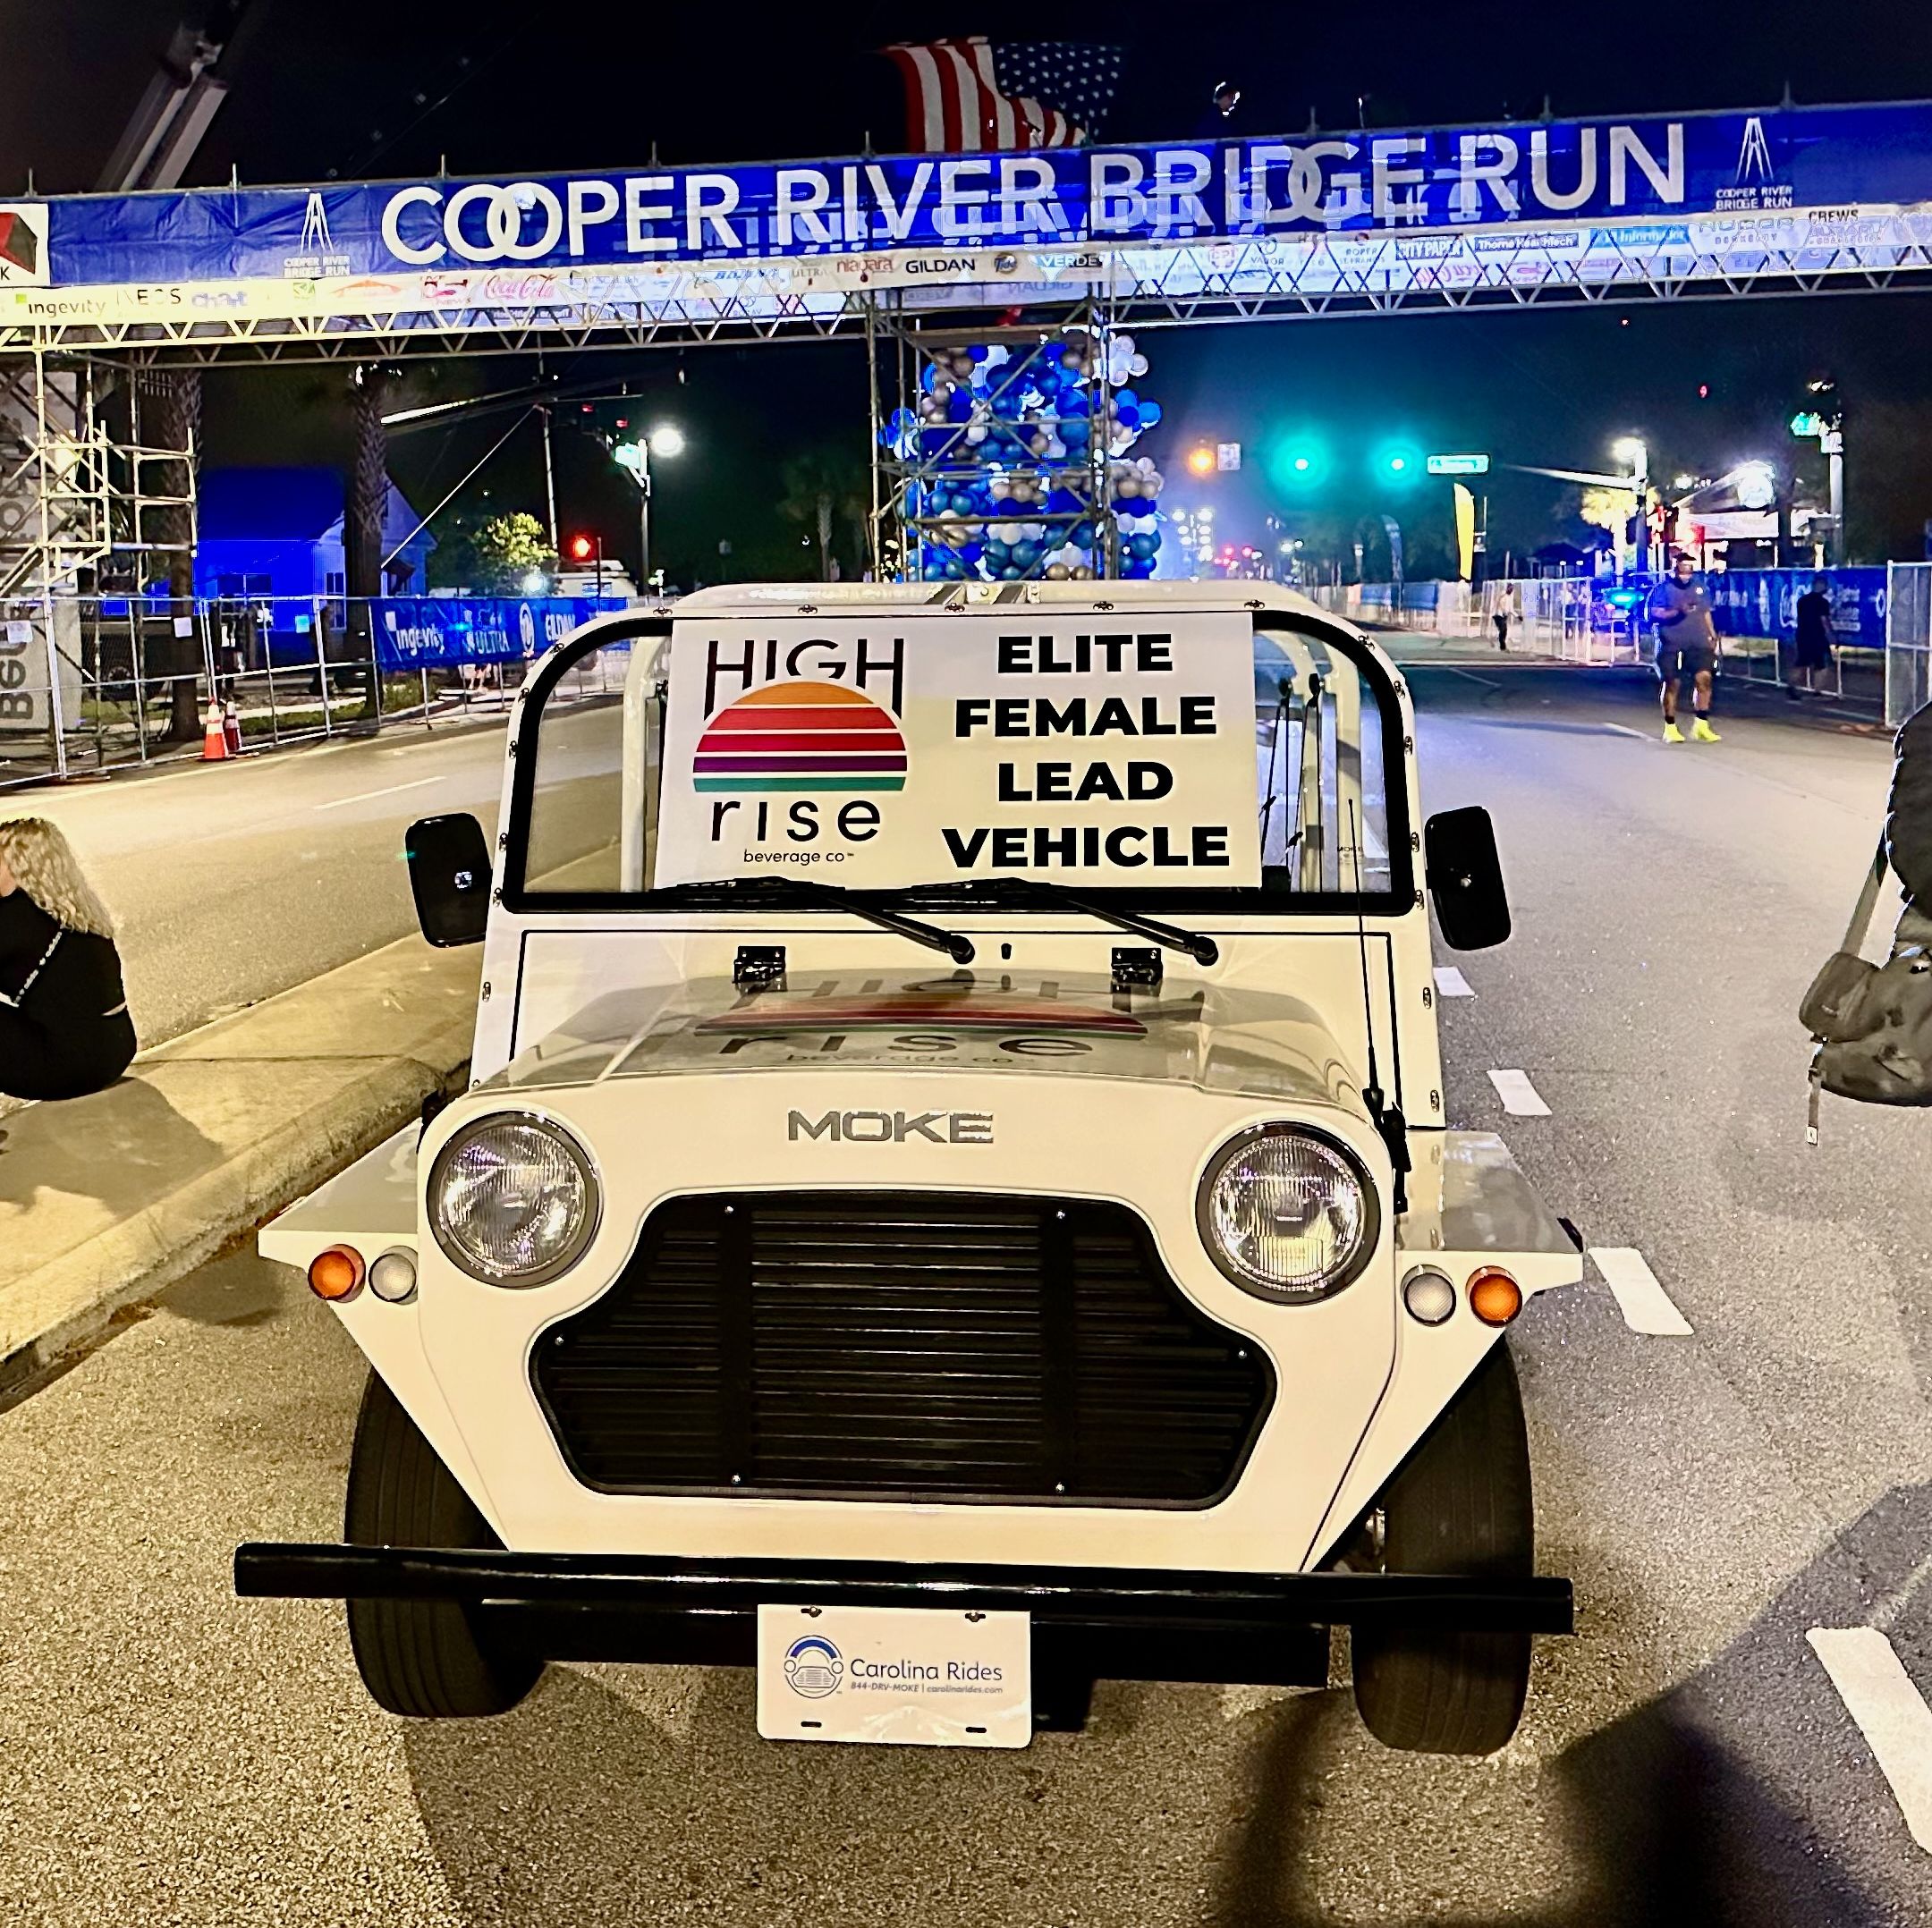 Cooper River Bridge Run - Elite Female Lead Vehicle